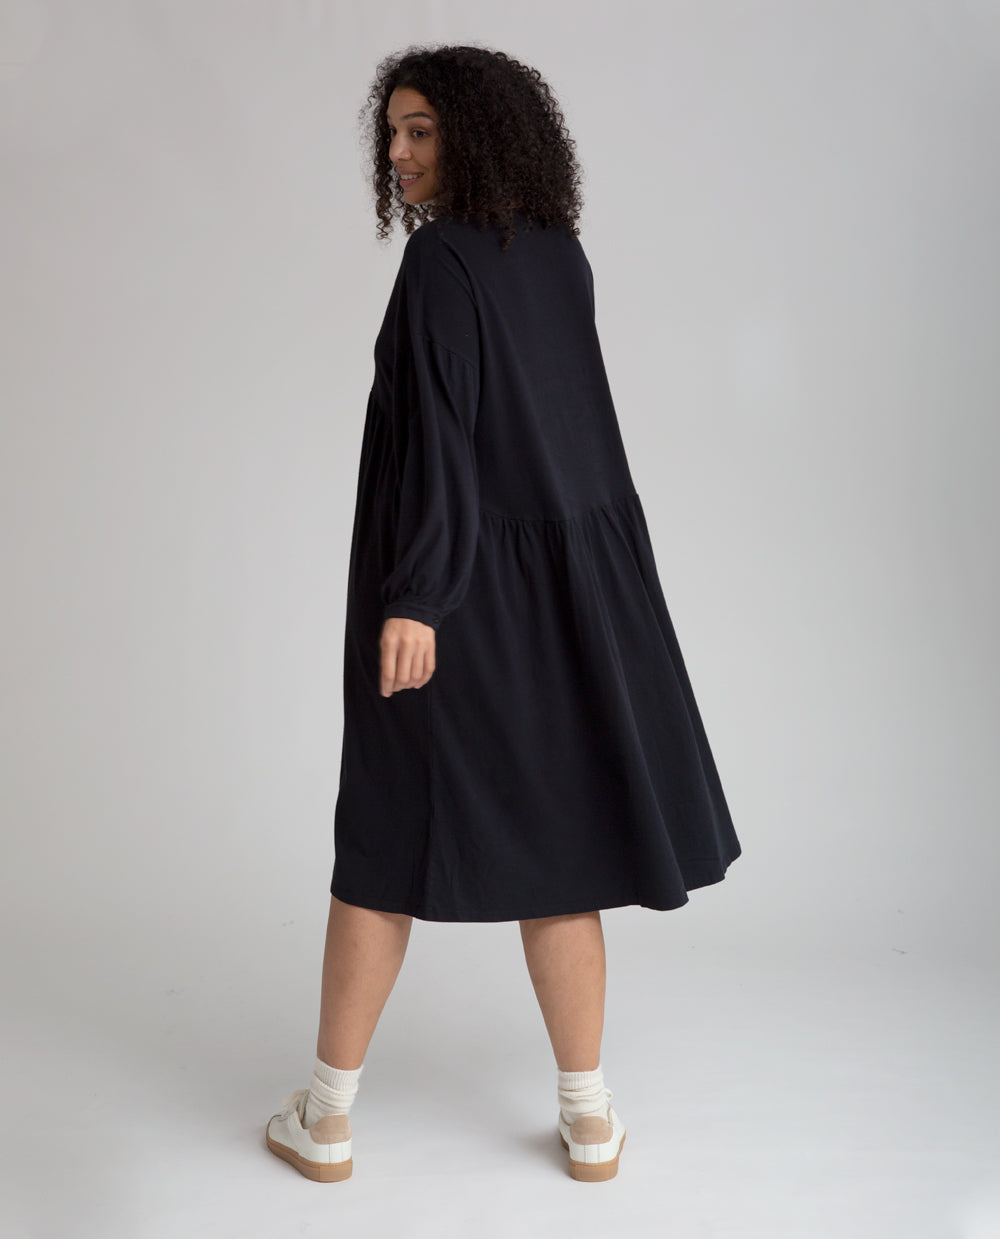 Beatrix Organic Cotton Dress In Black